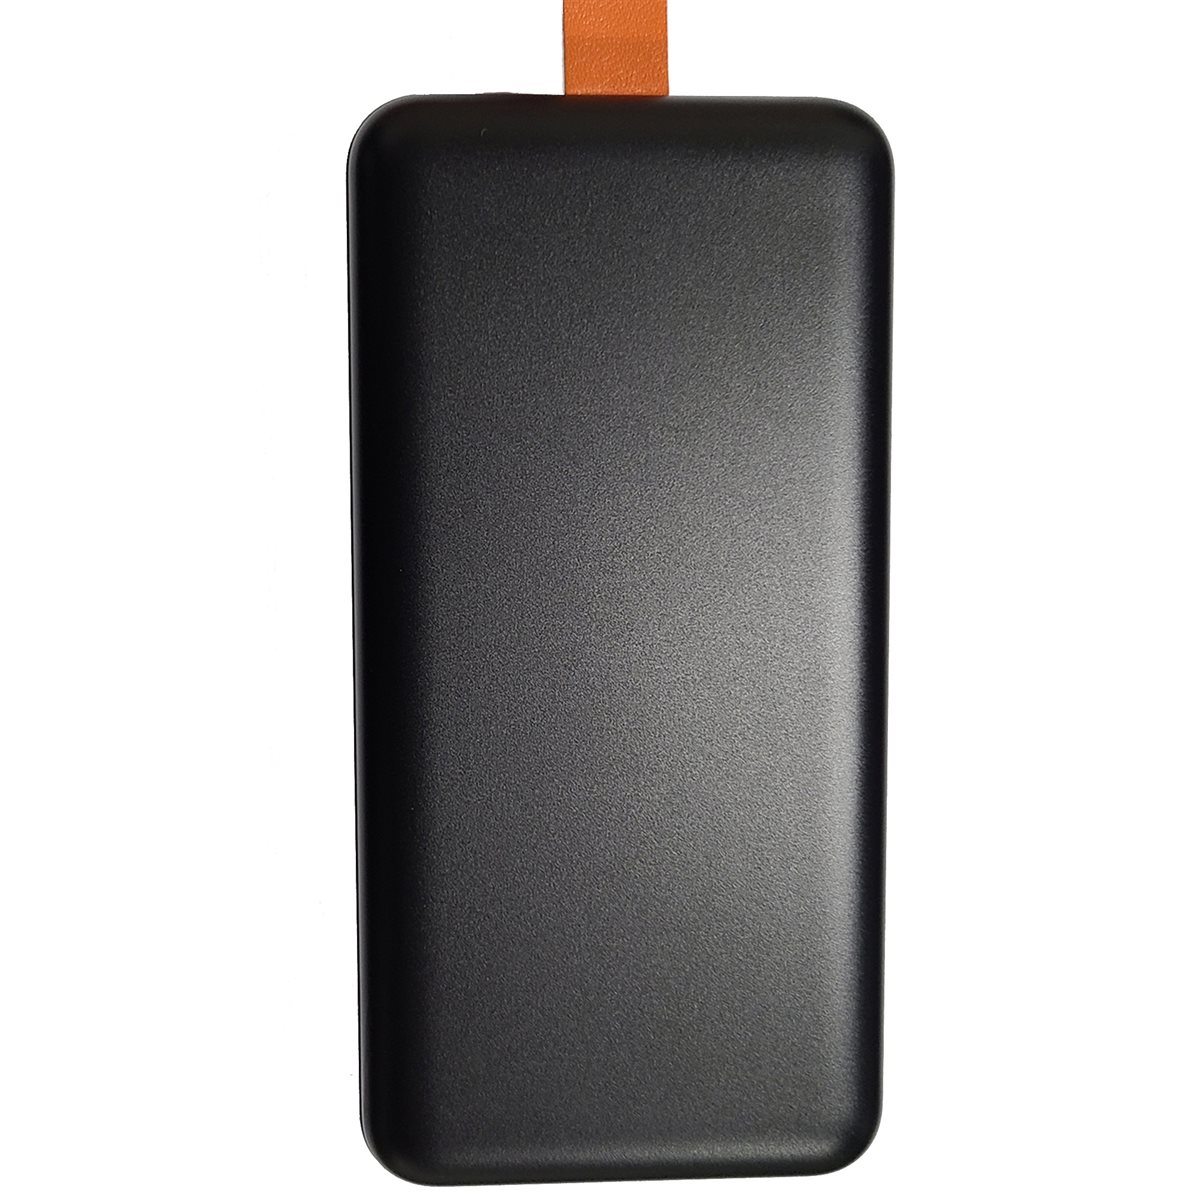 ChargeTech 30000 mAh Dual USB Power Bank - Black